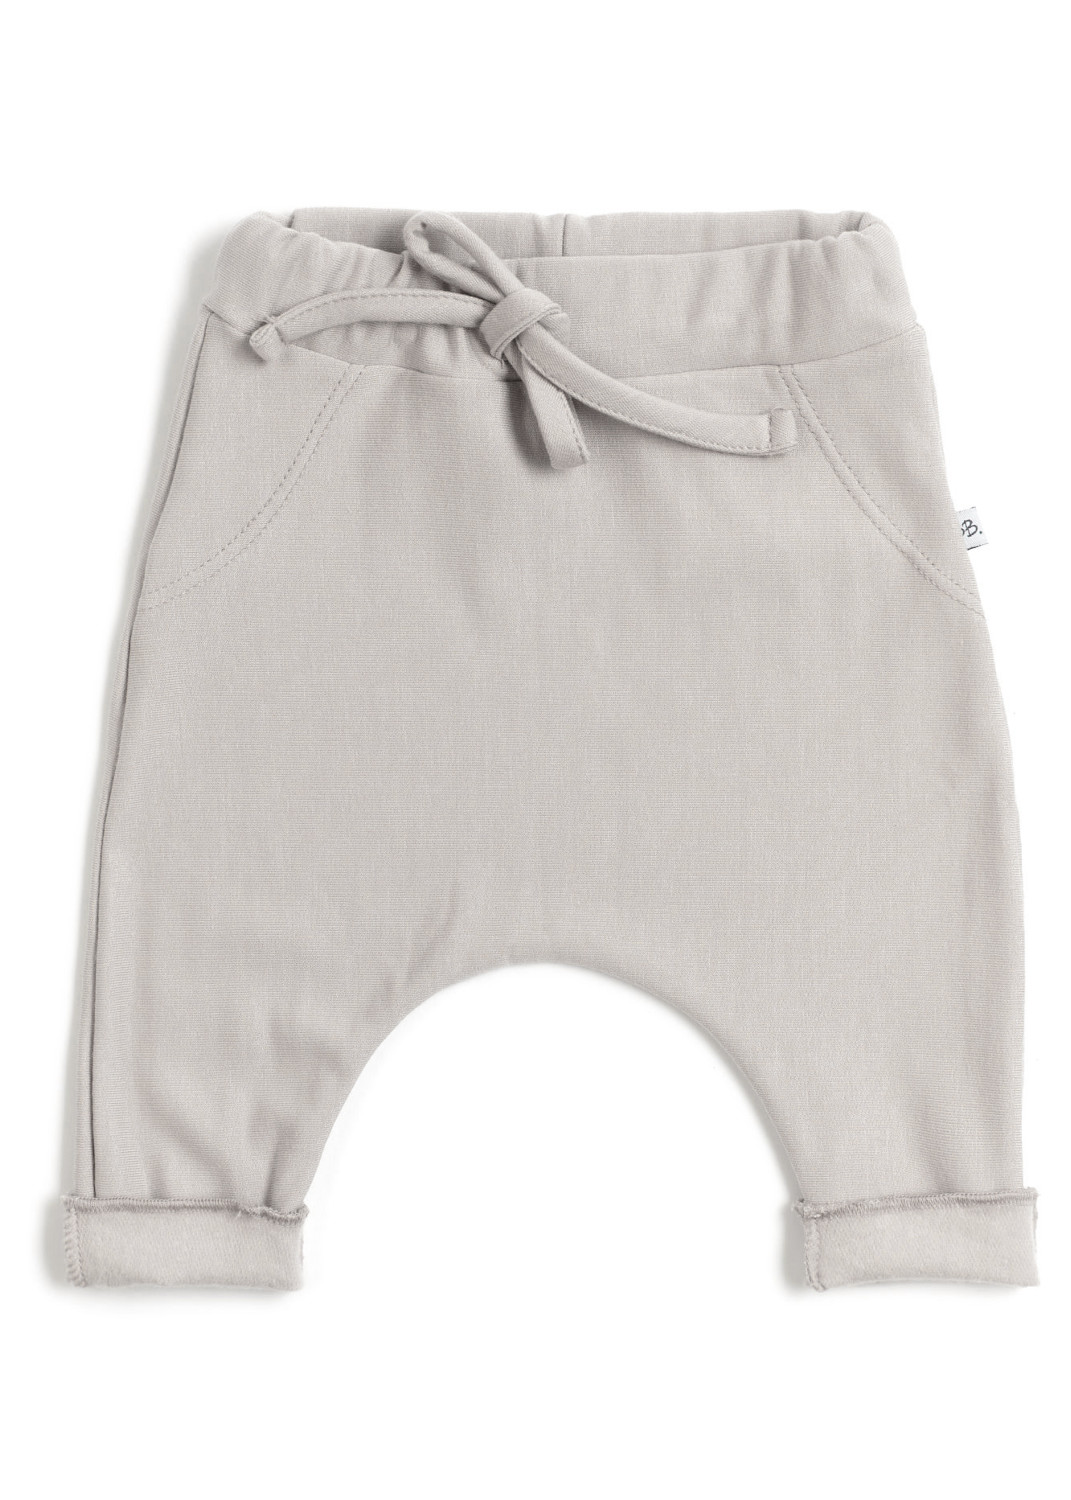 Pantaloni per neonati e bimbi in Bamboo organico Sabbia_100250